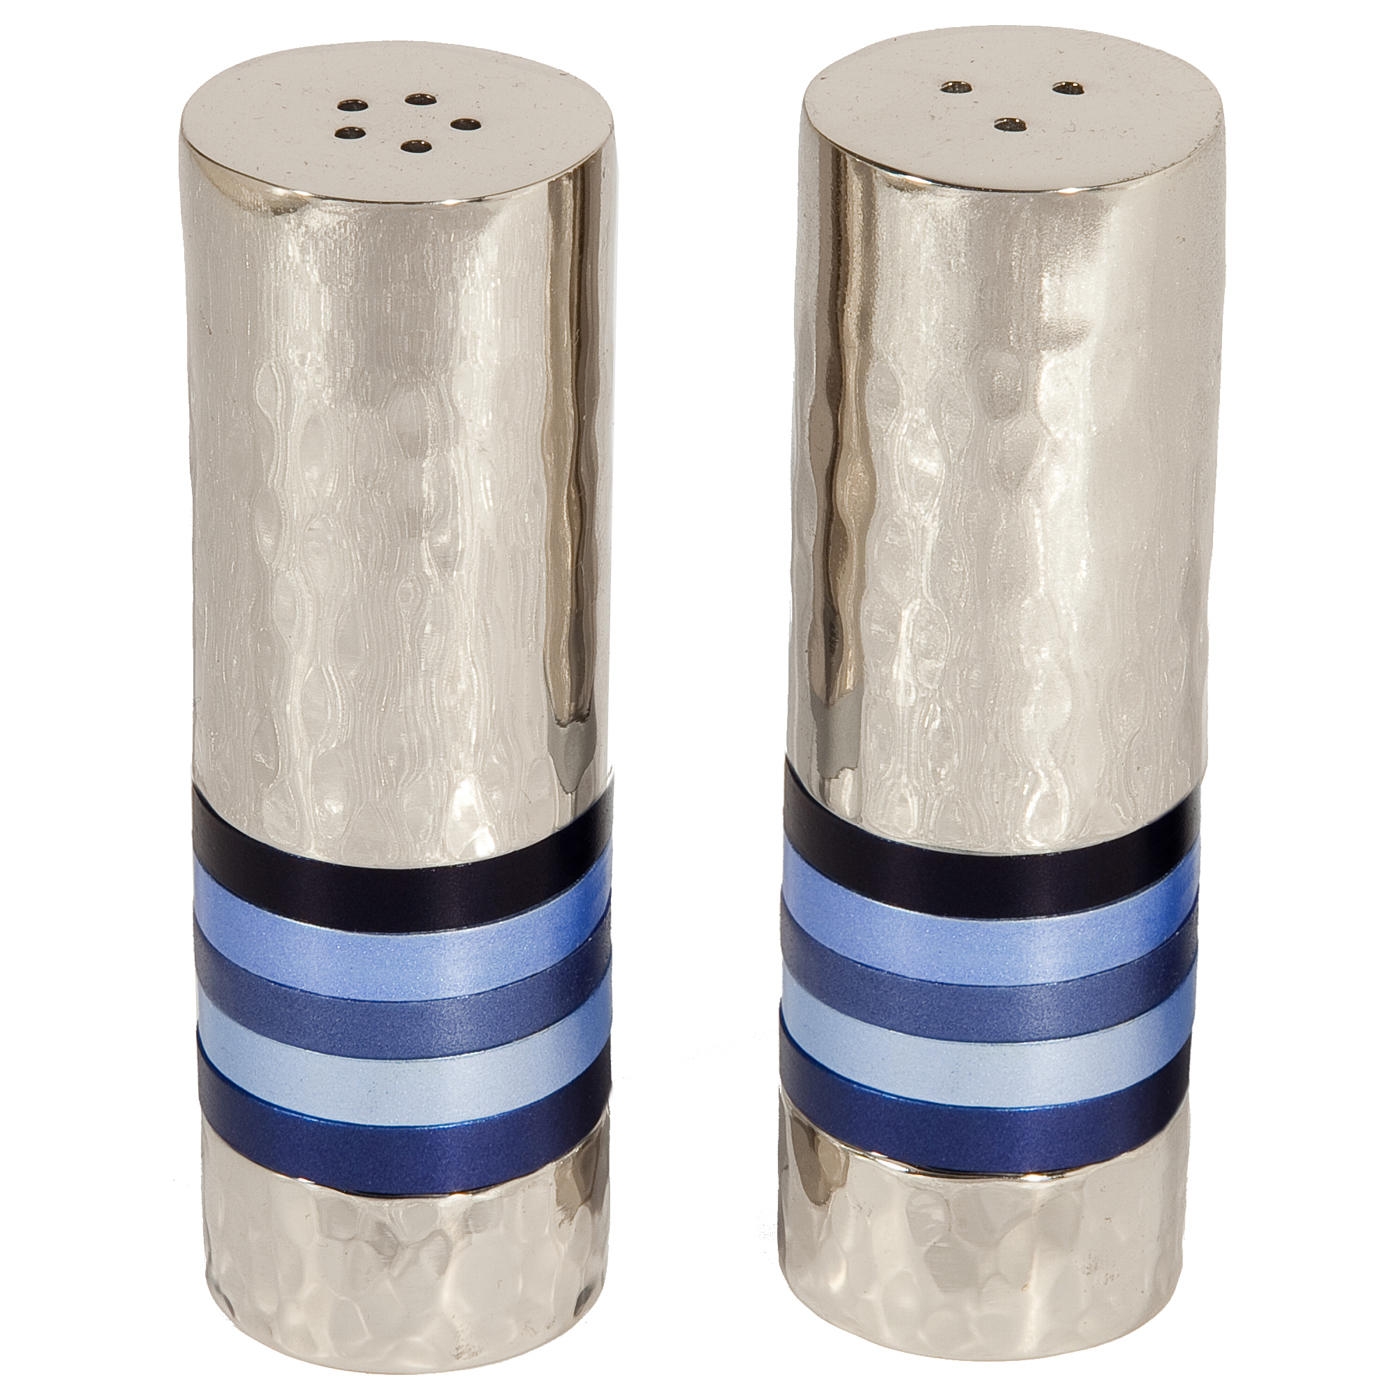 Yair Emanuel Textured Nickel Cylinder Salt and Pepper Set (Choice of Colors) - 2